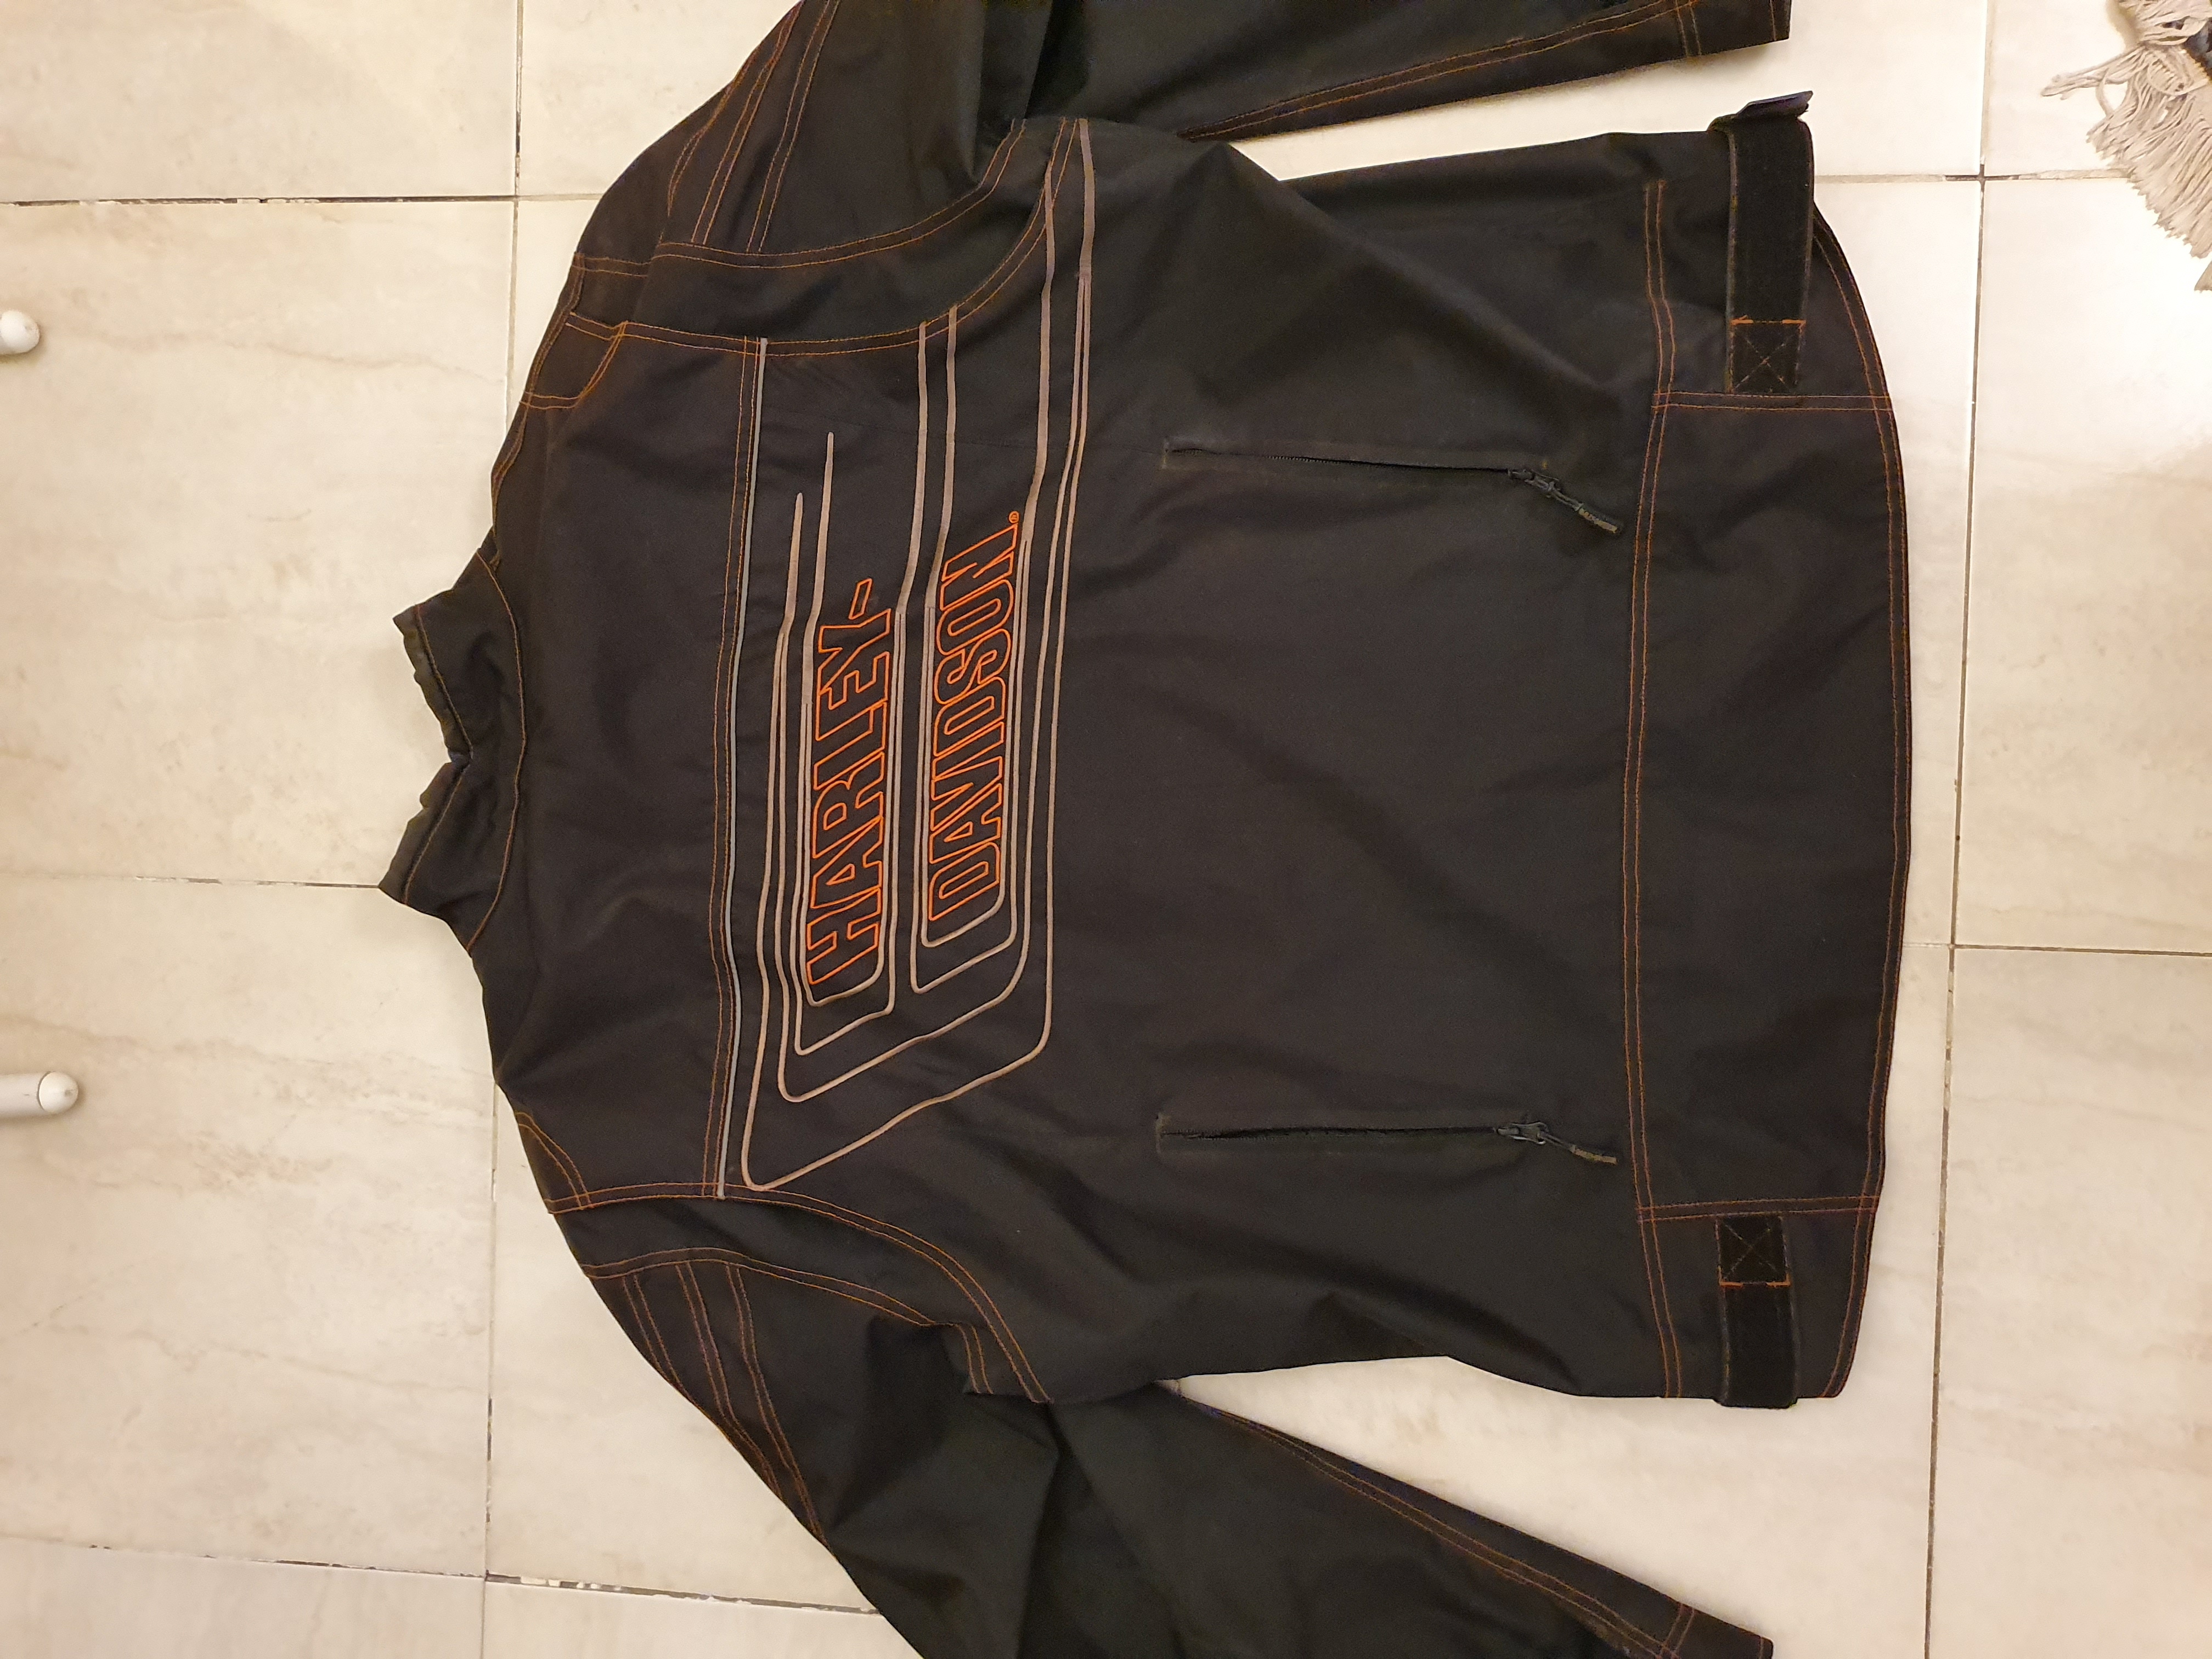 Harley Davidson -  Jacket - Harley davidson safety jacket